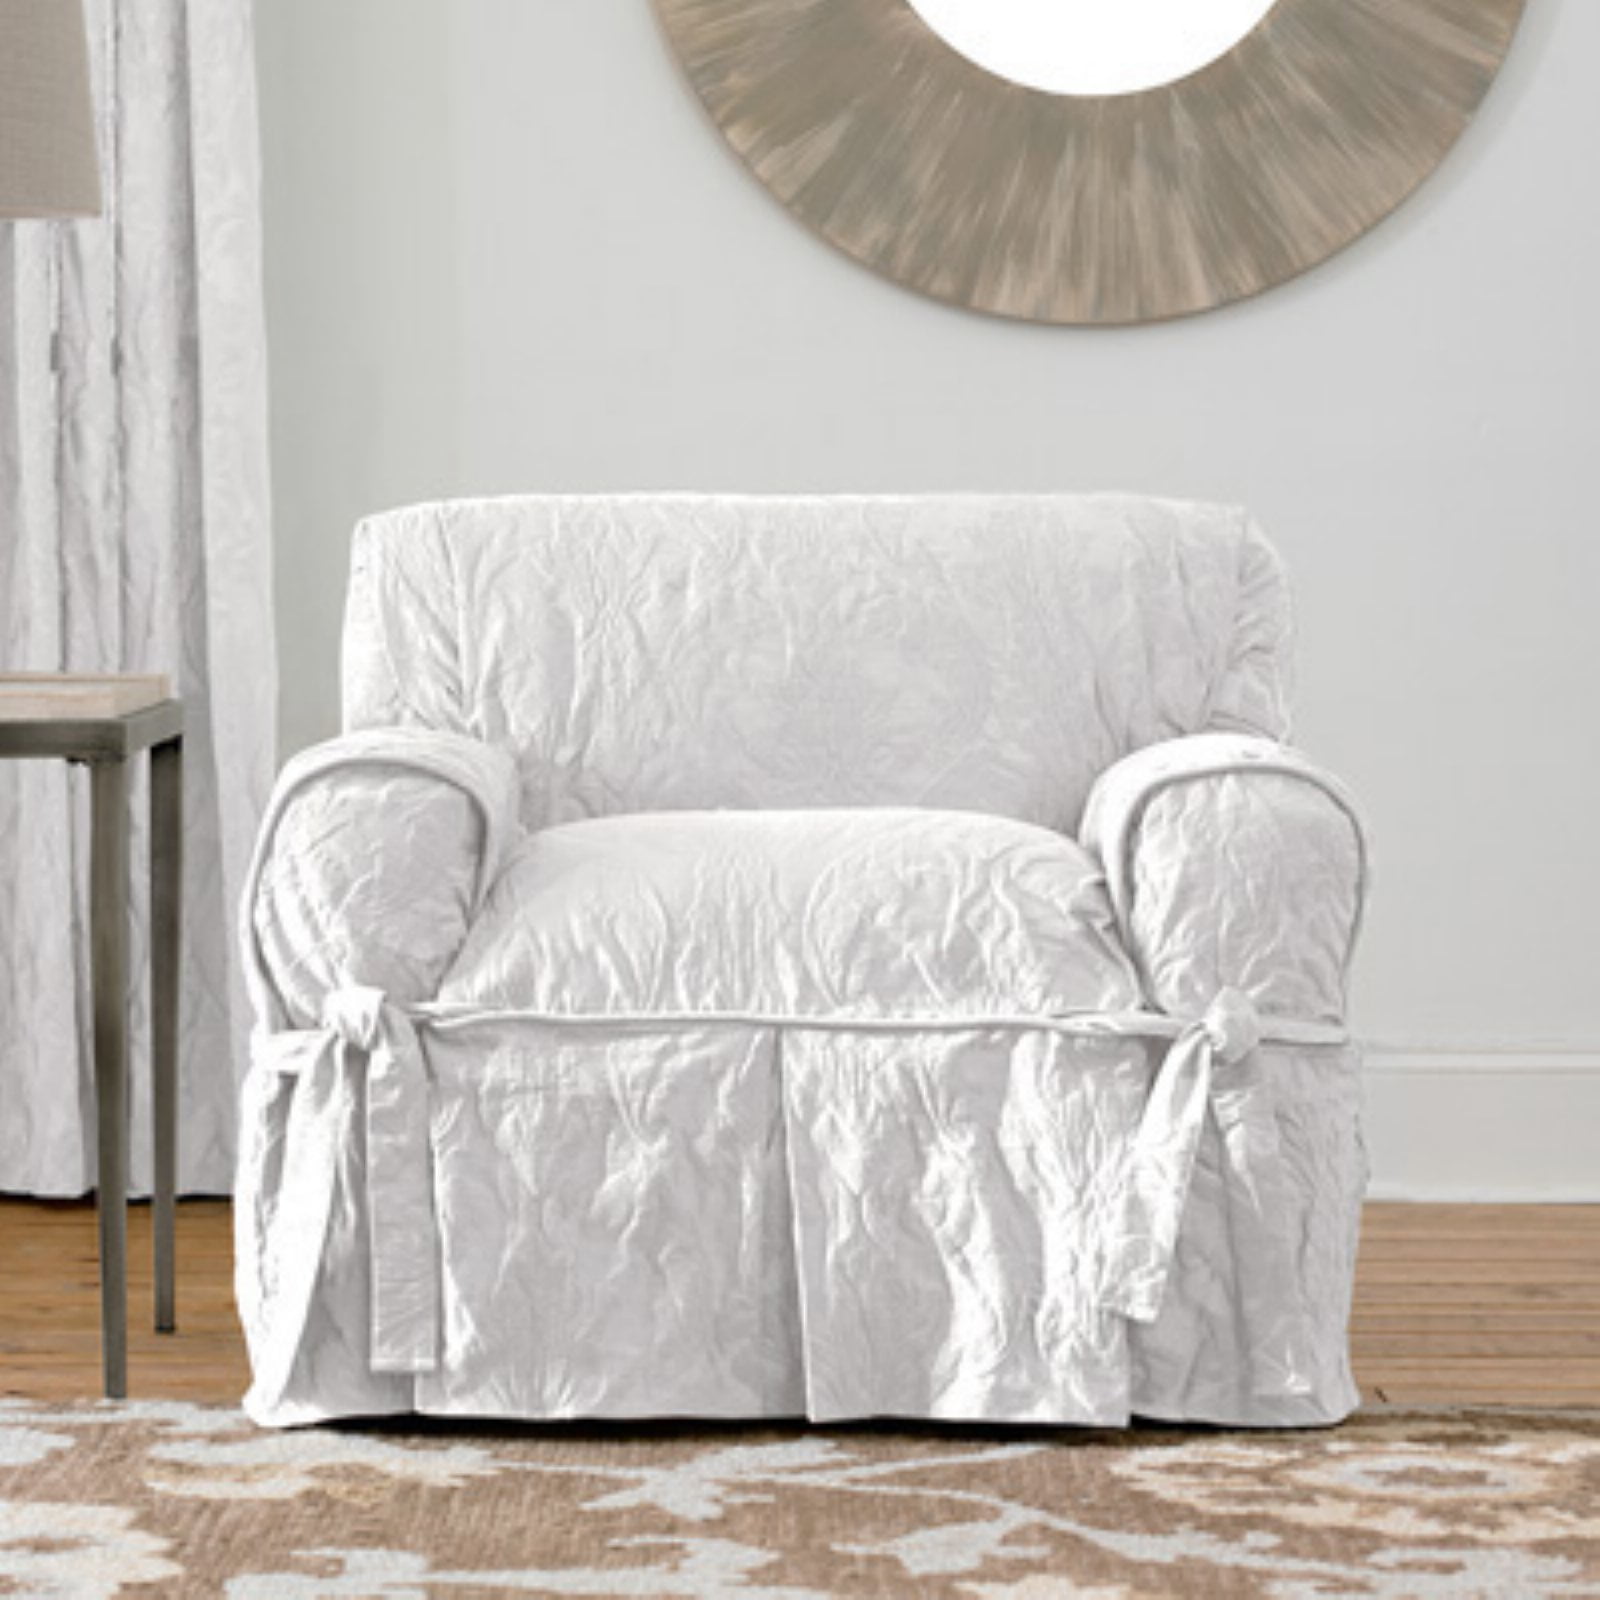 Sure Fit Matelasse Damask Sofa Cover, Sure Fit Matelasse Damask Dining Room Chair Cover White